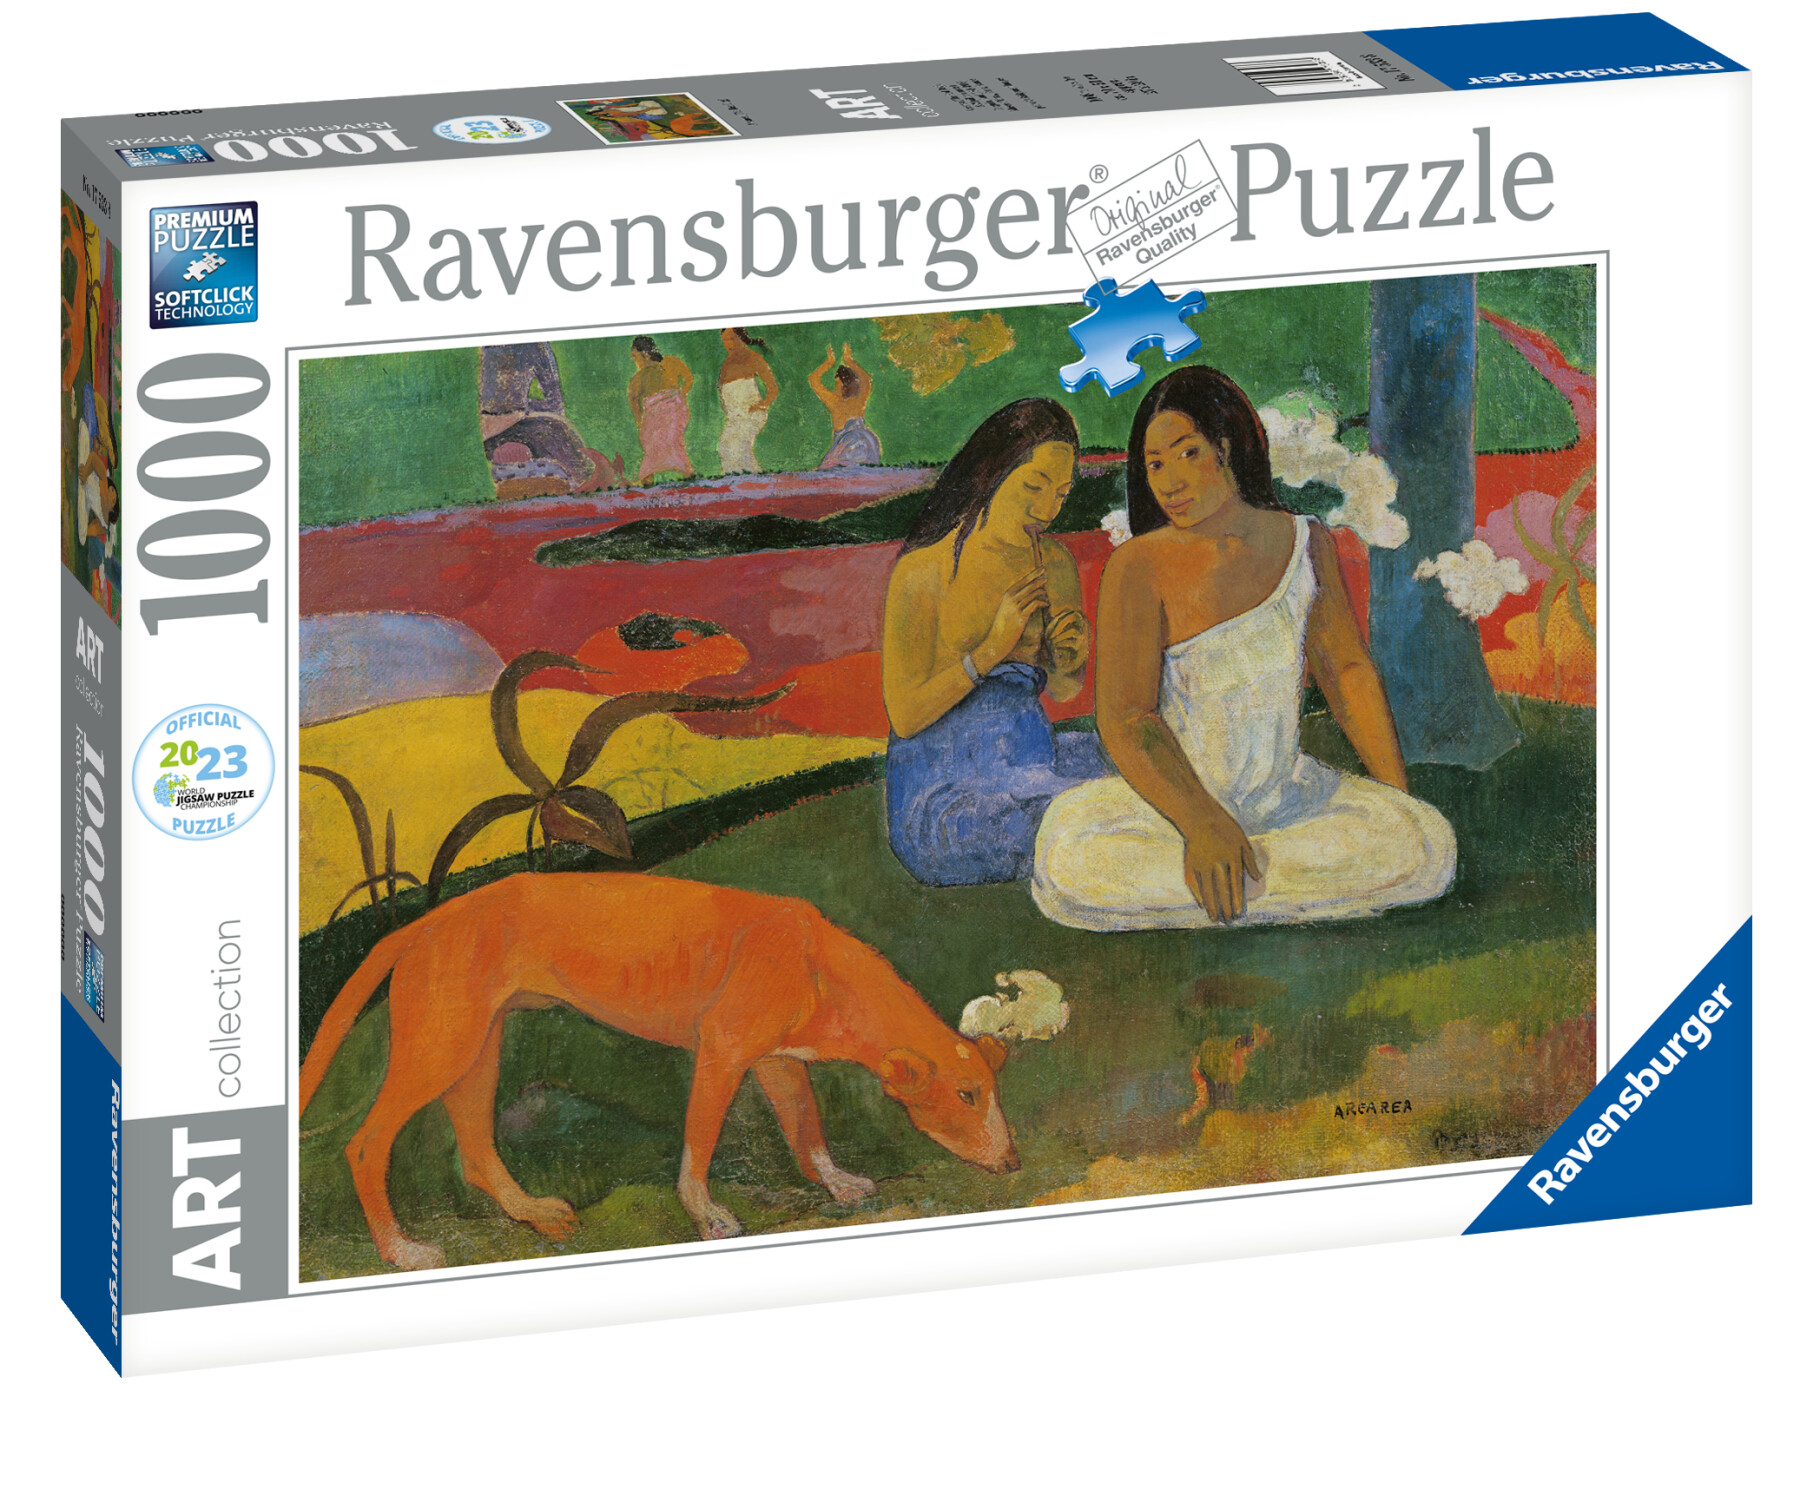 Ravensburger - puzzle gauguin: arearea, art collection, 1000 pezzi, puzzle adulti - RAVENSBURGER